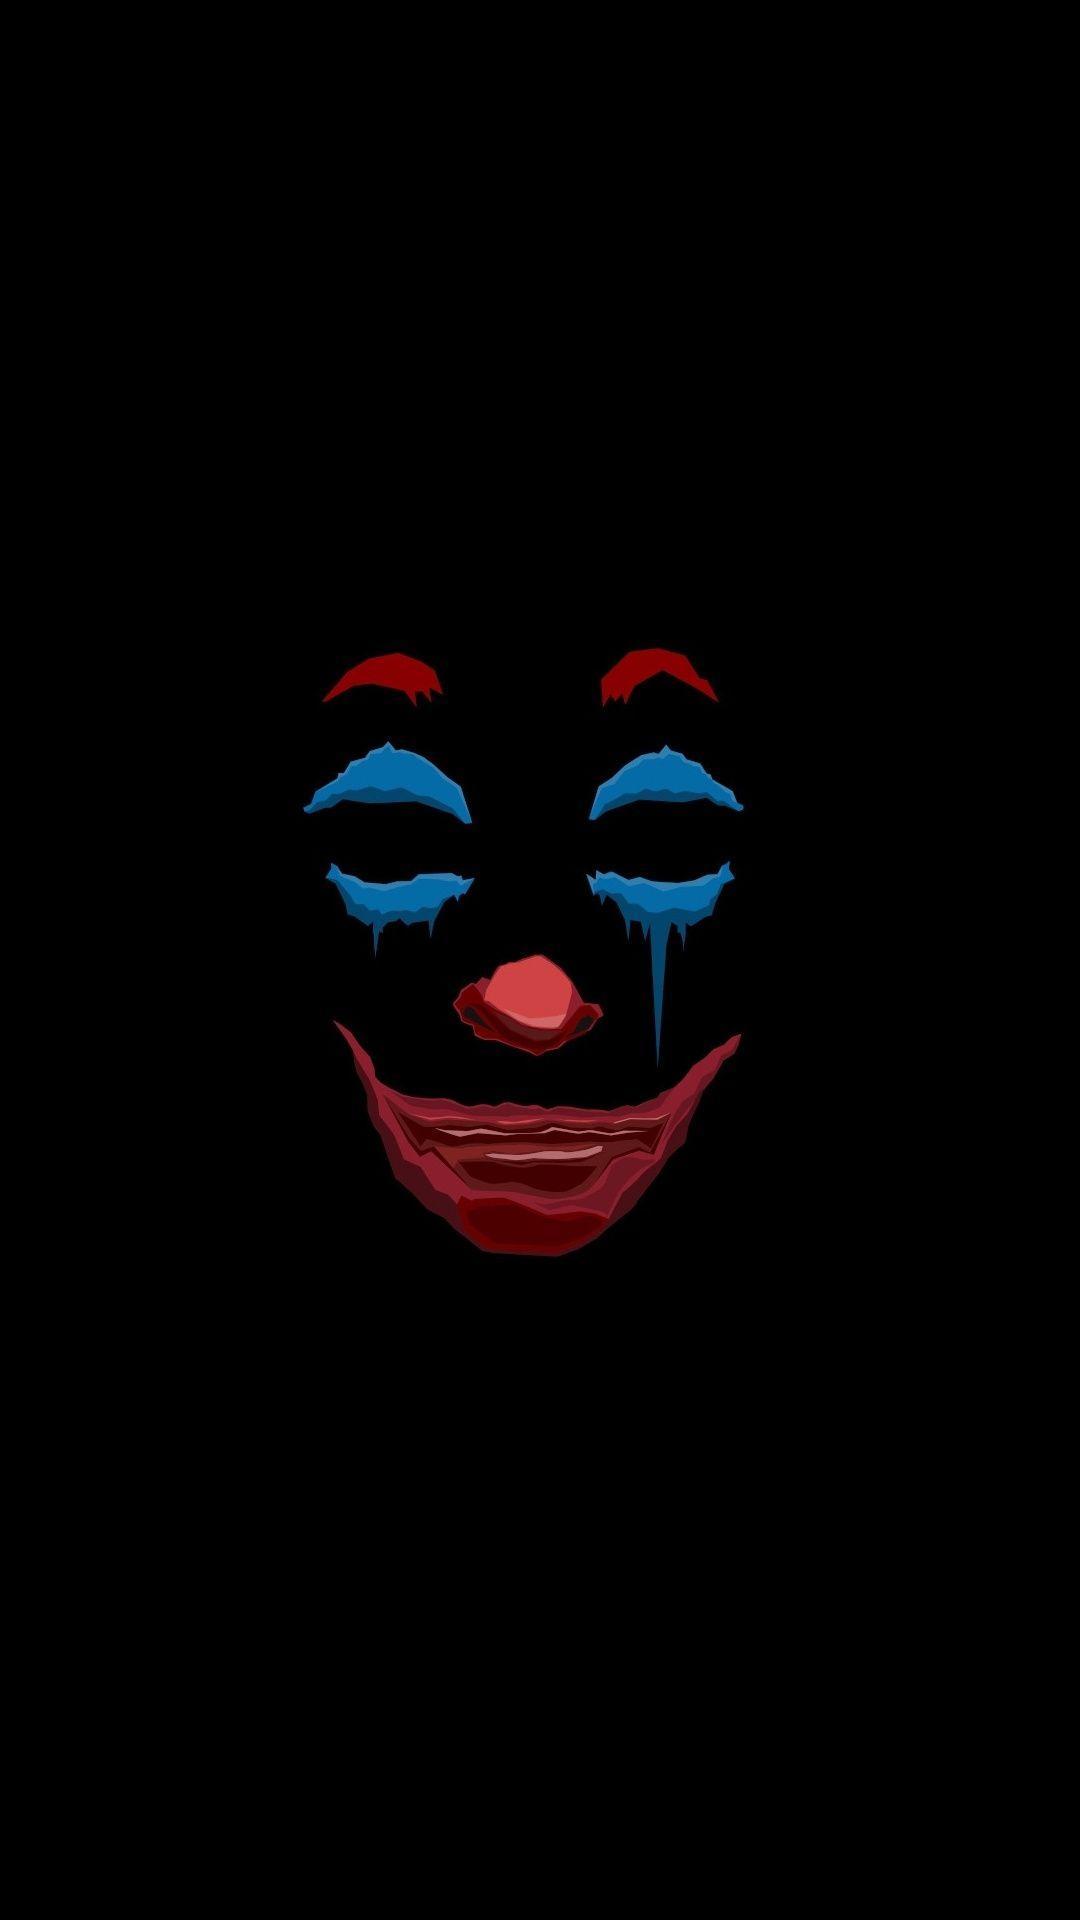 Joker movie, face, minimalist wallpaper in 2019